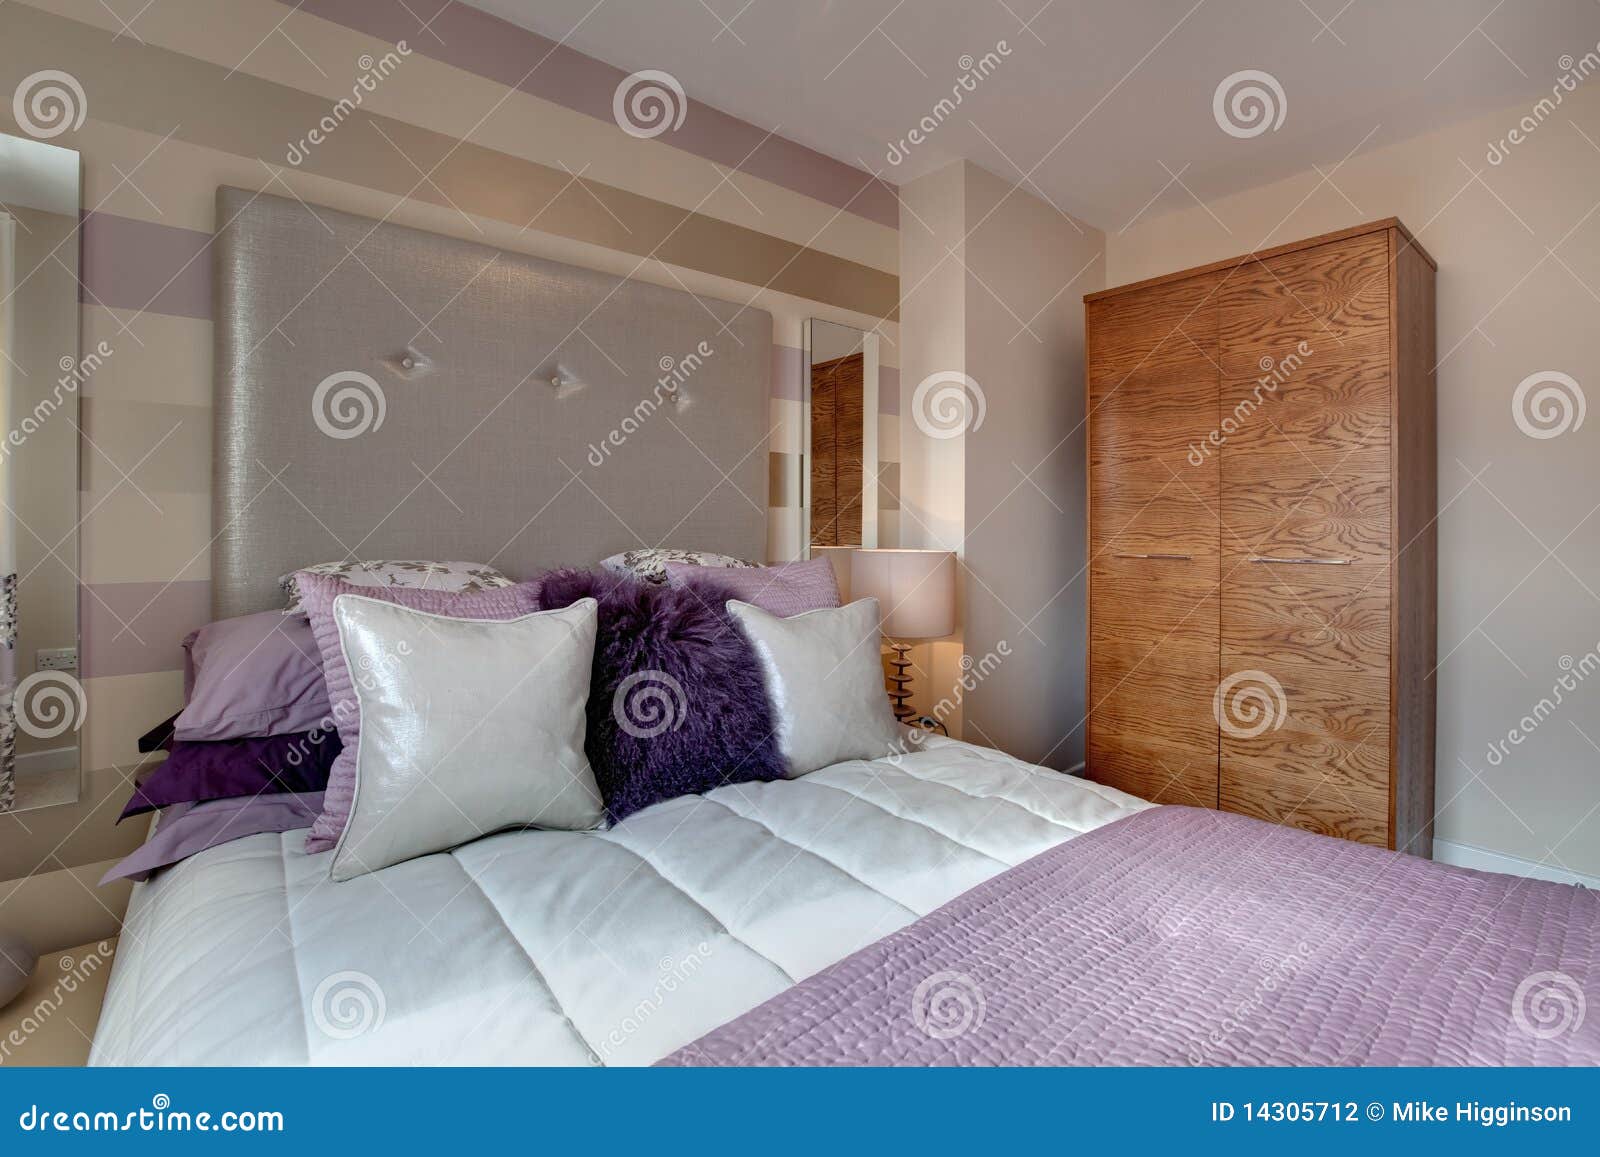 opulent modern bedroom